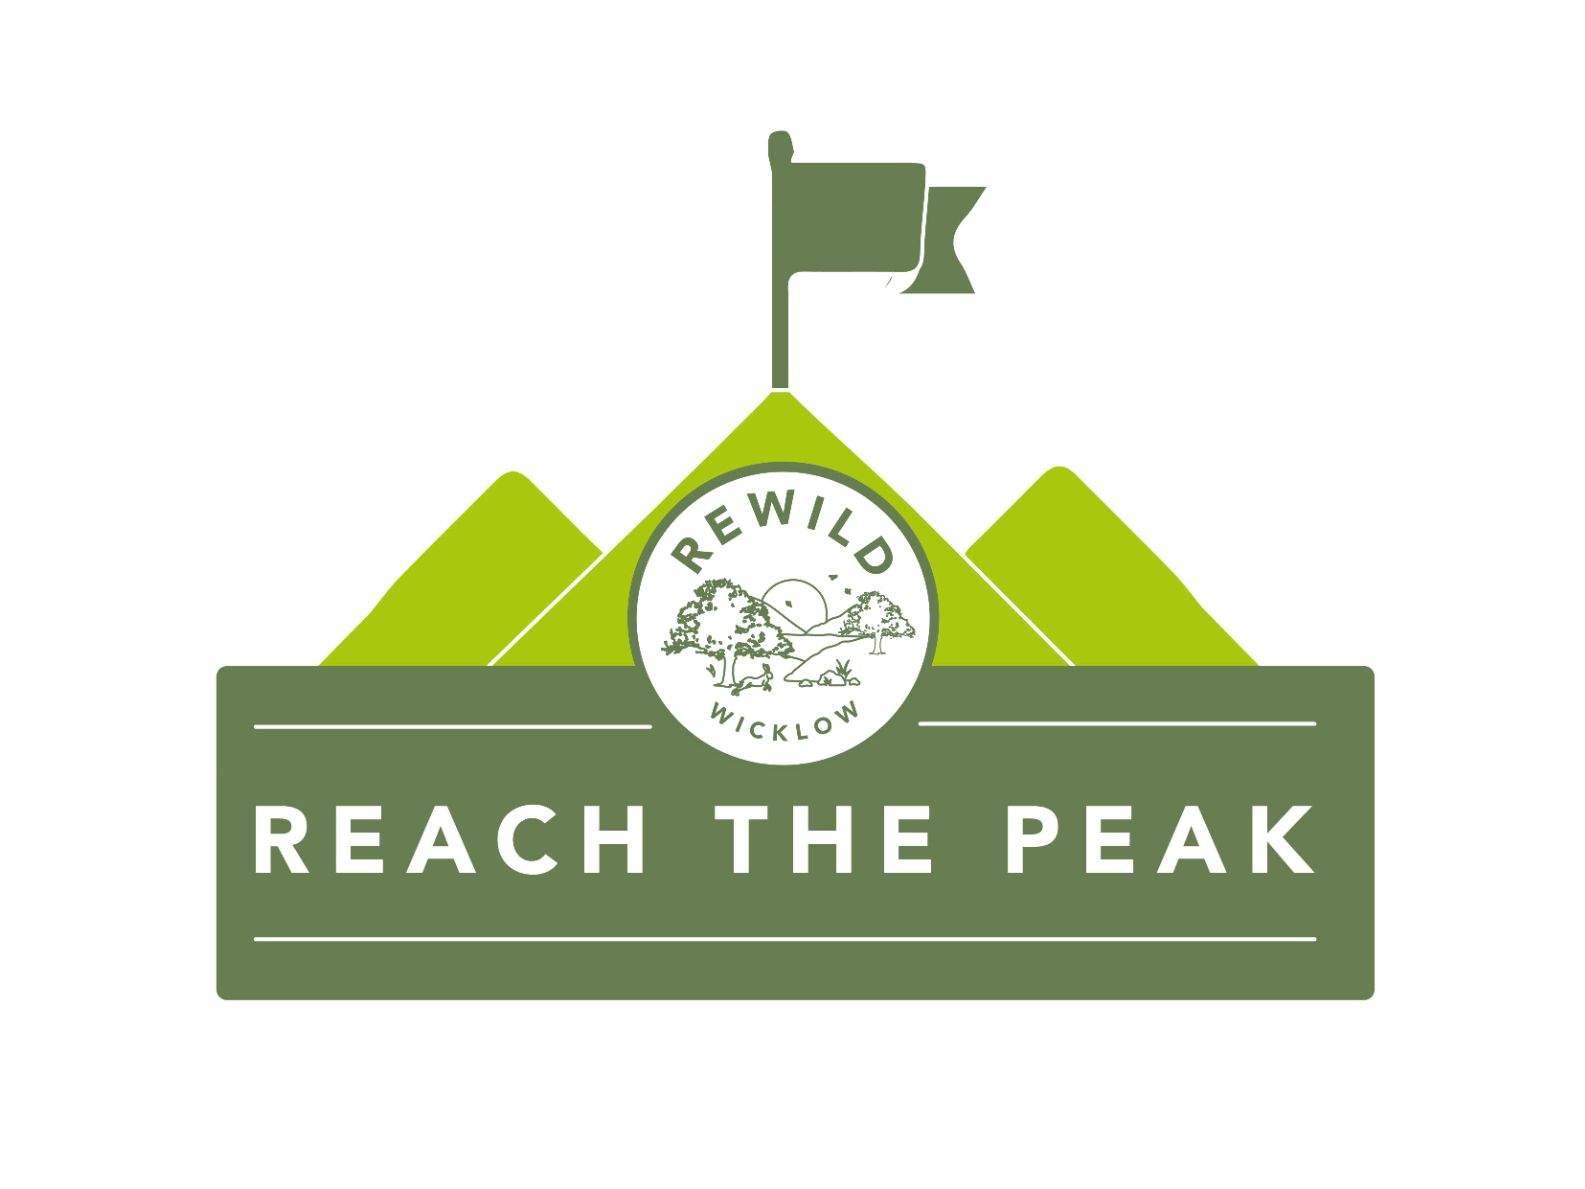 Registration open for Reach the Peak sponsored climb